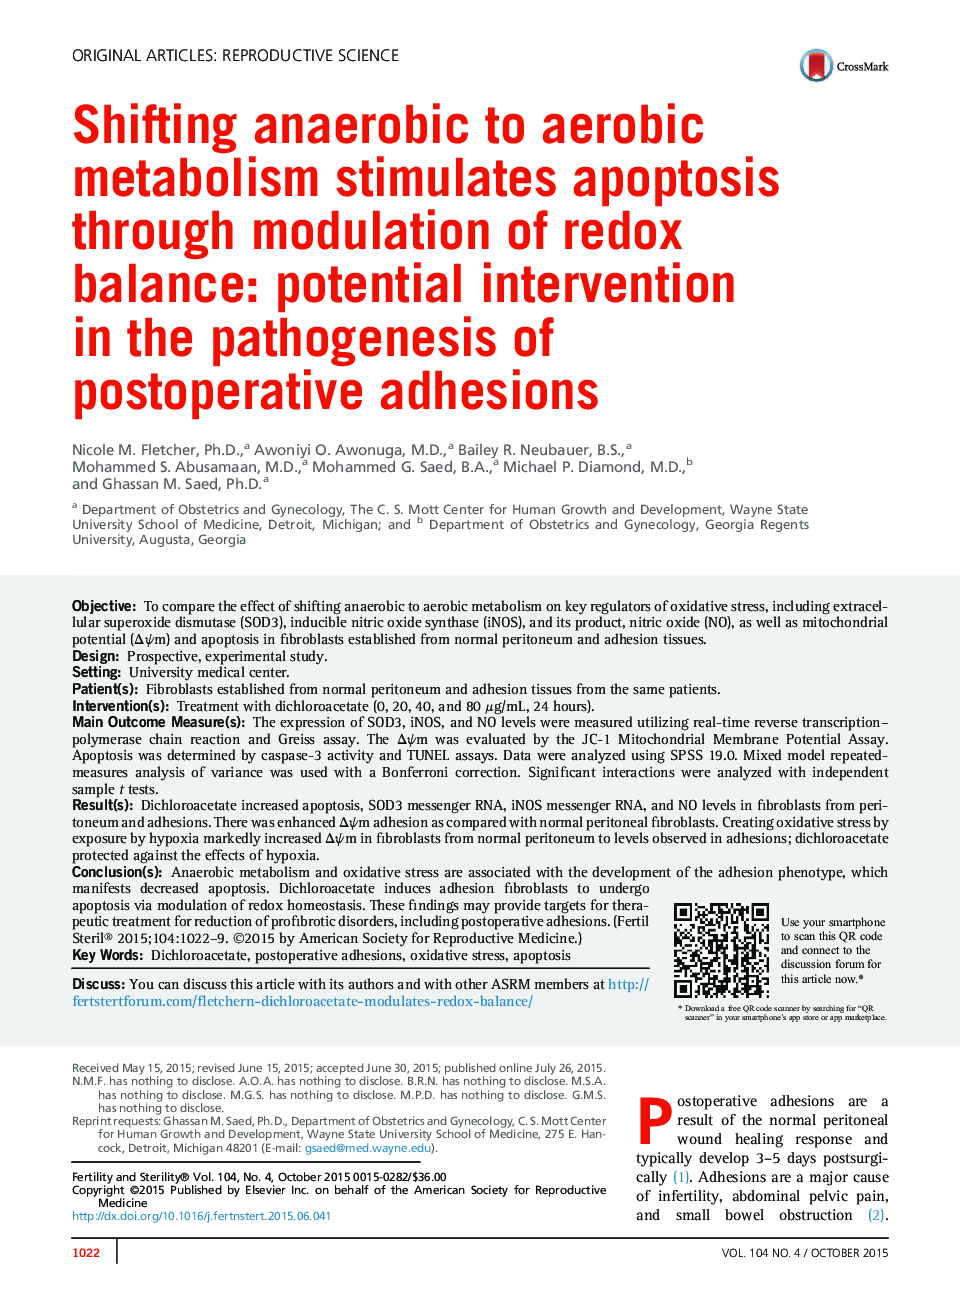 Shifting anaerobic to aerobic metabolism stimulates apoptosis through modulation of redox balance: potential intervention in the pathogenesis of postoperative adhesions 